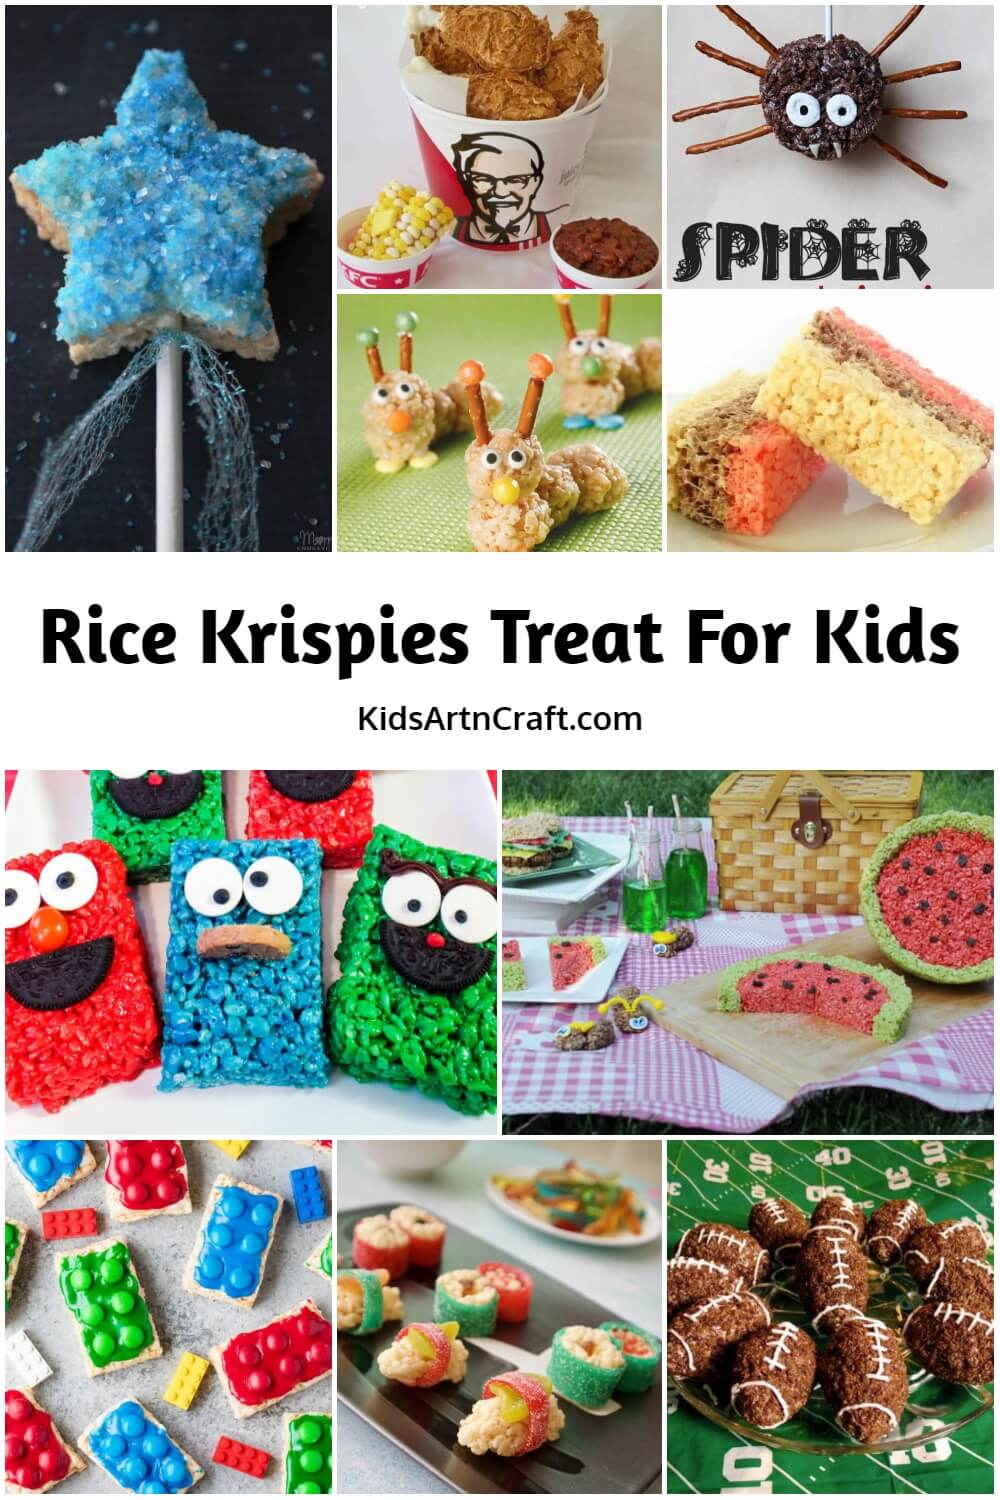 Rice Krispies Treat For Kids